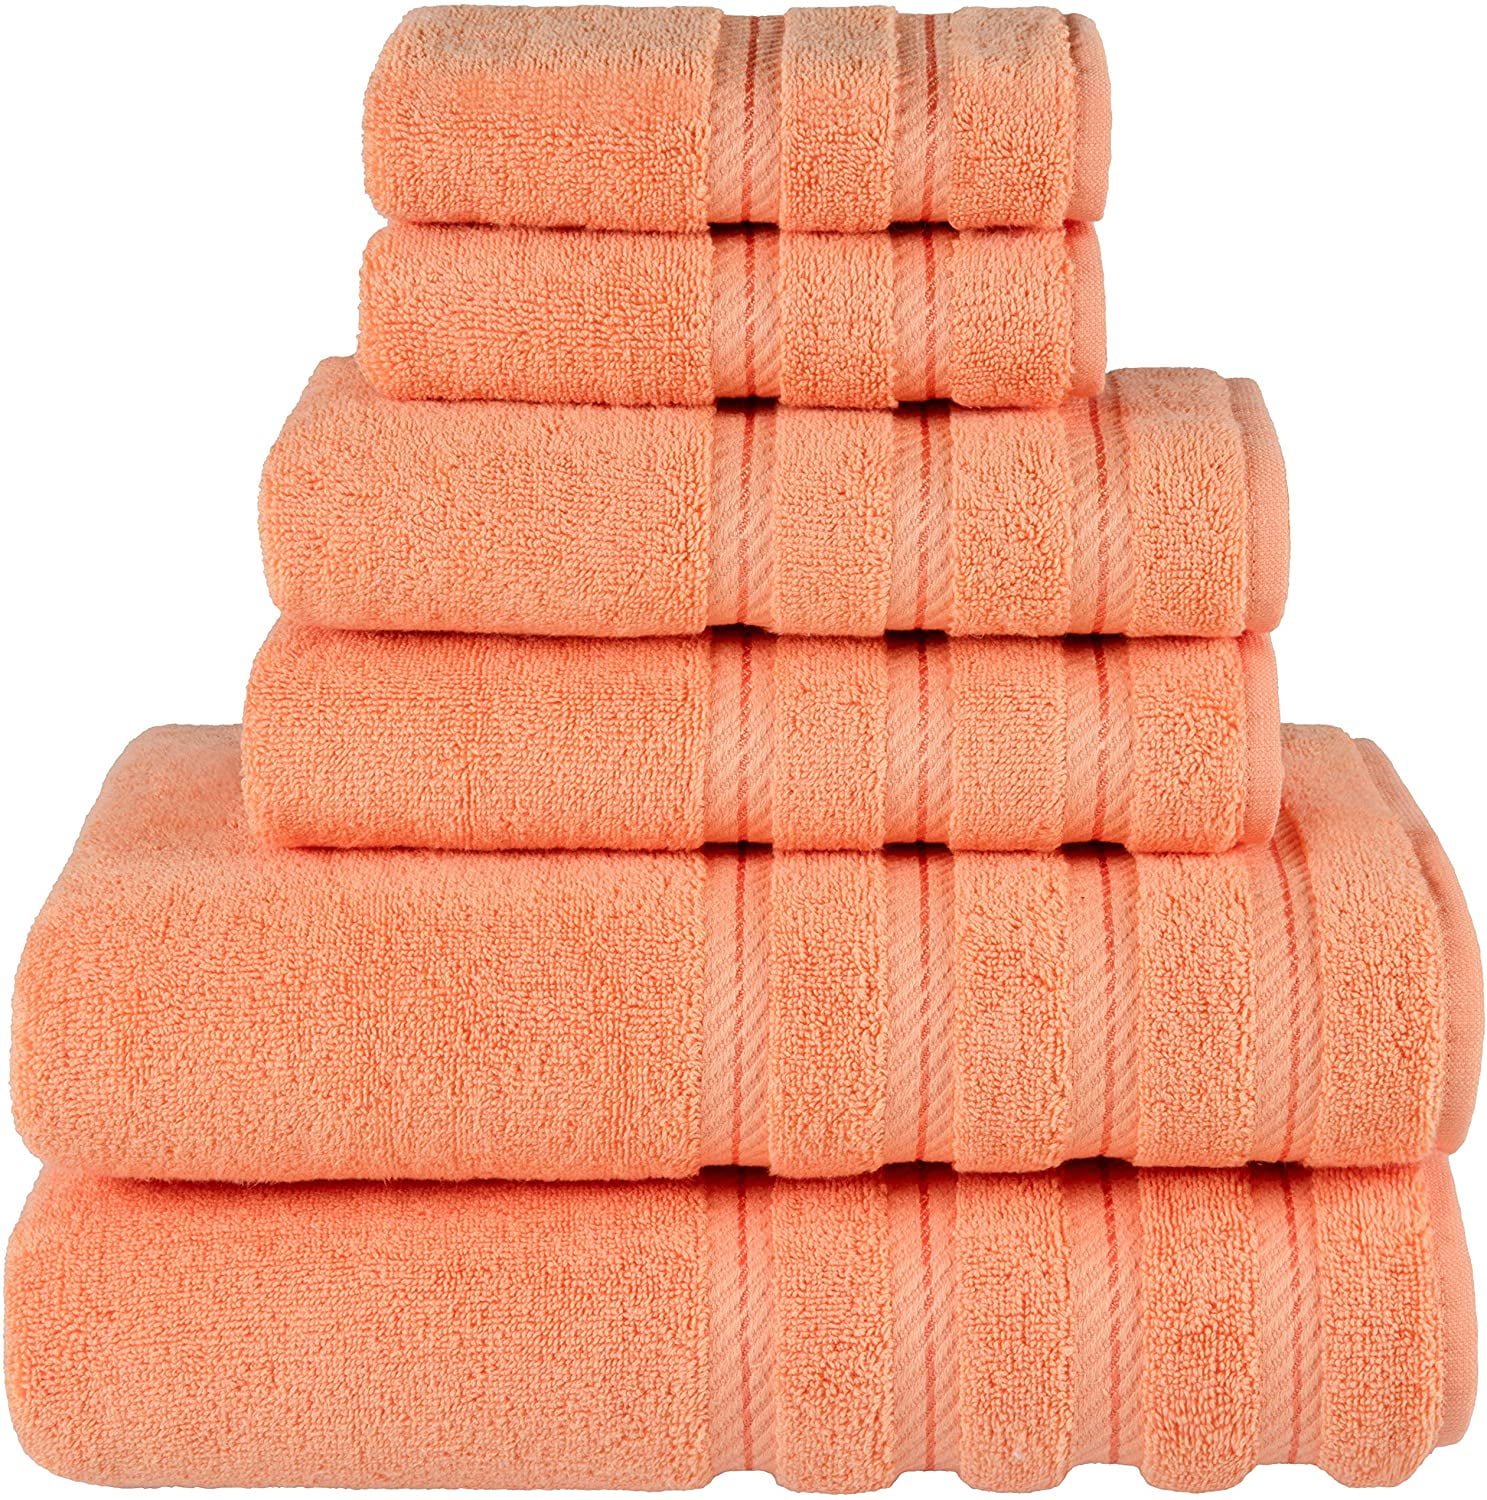 Beach Towel Casa Copenhagen Solitaire Luxury Hotel & Spa Quality 600 GSM Premium Cotton 2 Piece Bath Sheet Set 36 x 72 Inches Lime Green Size 